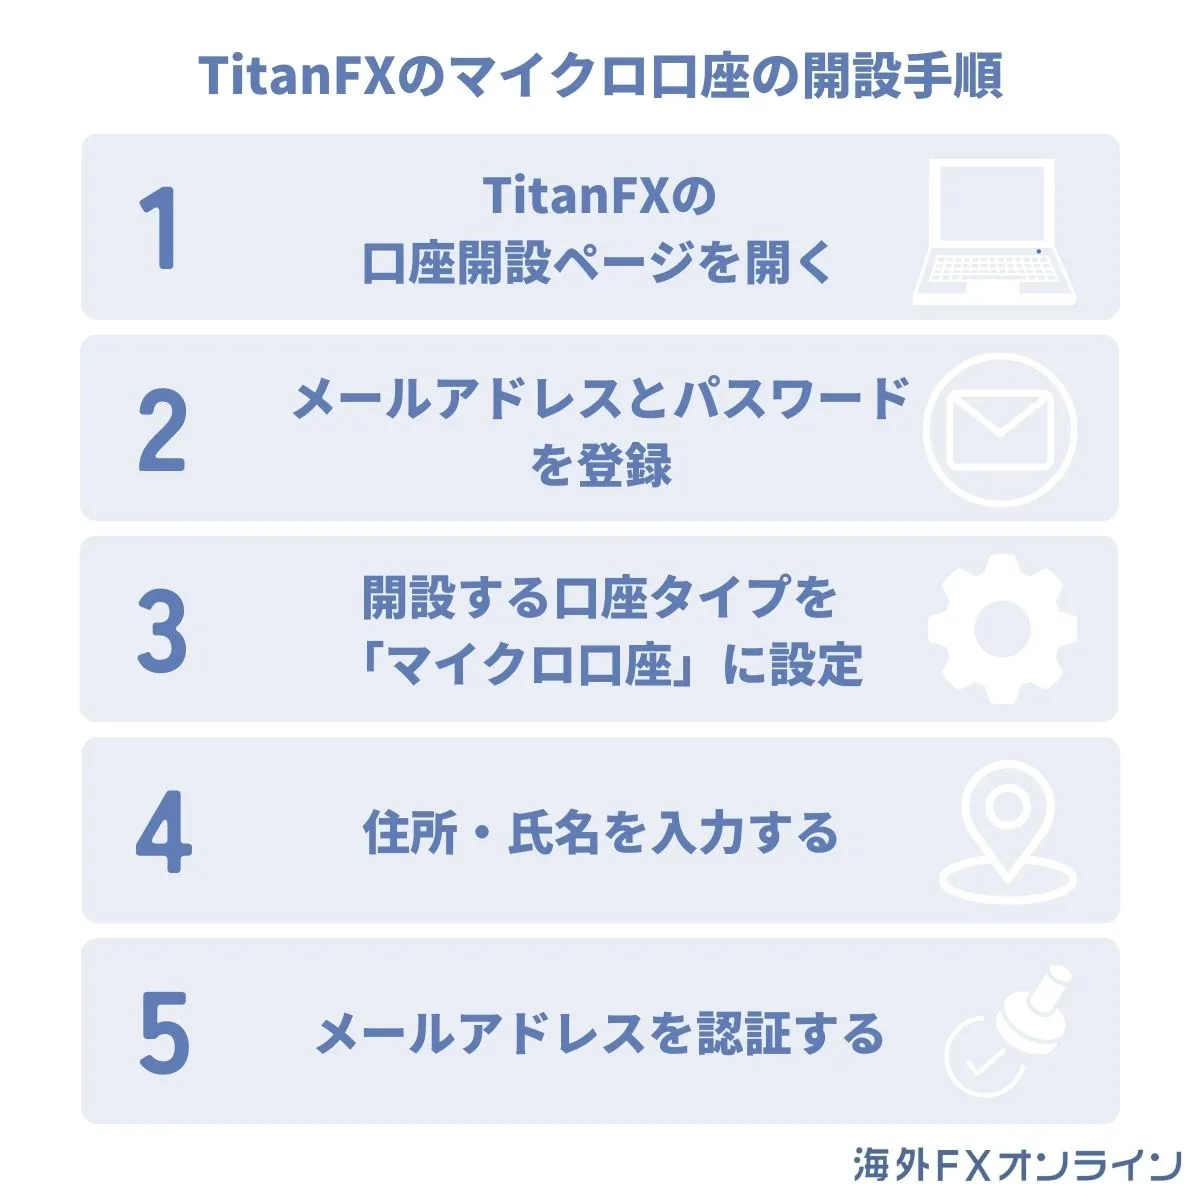 TitanFXのマイクロ口座の開設手順